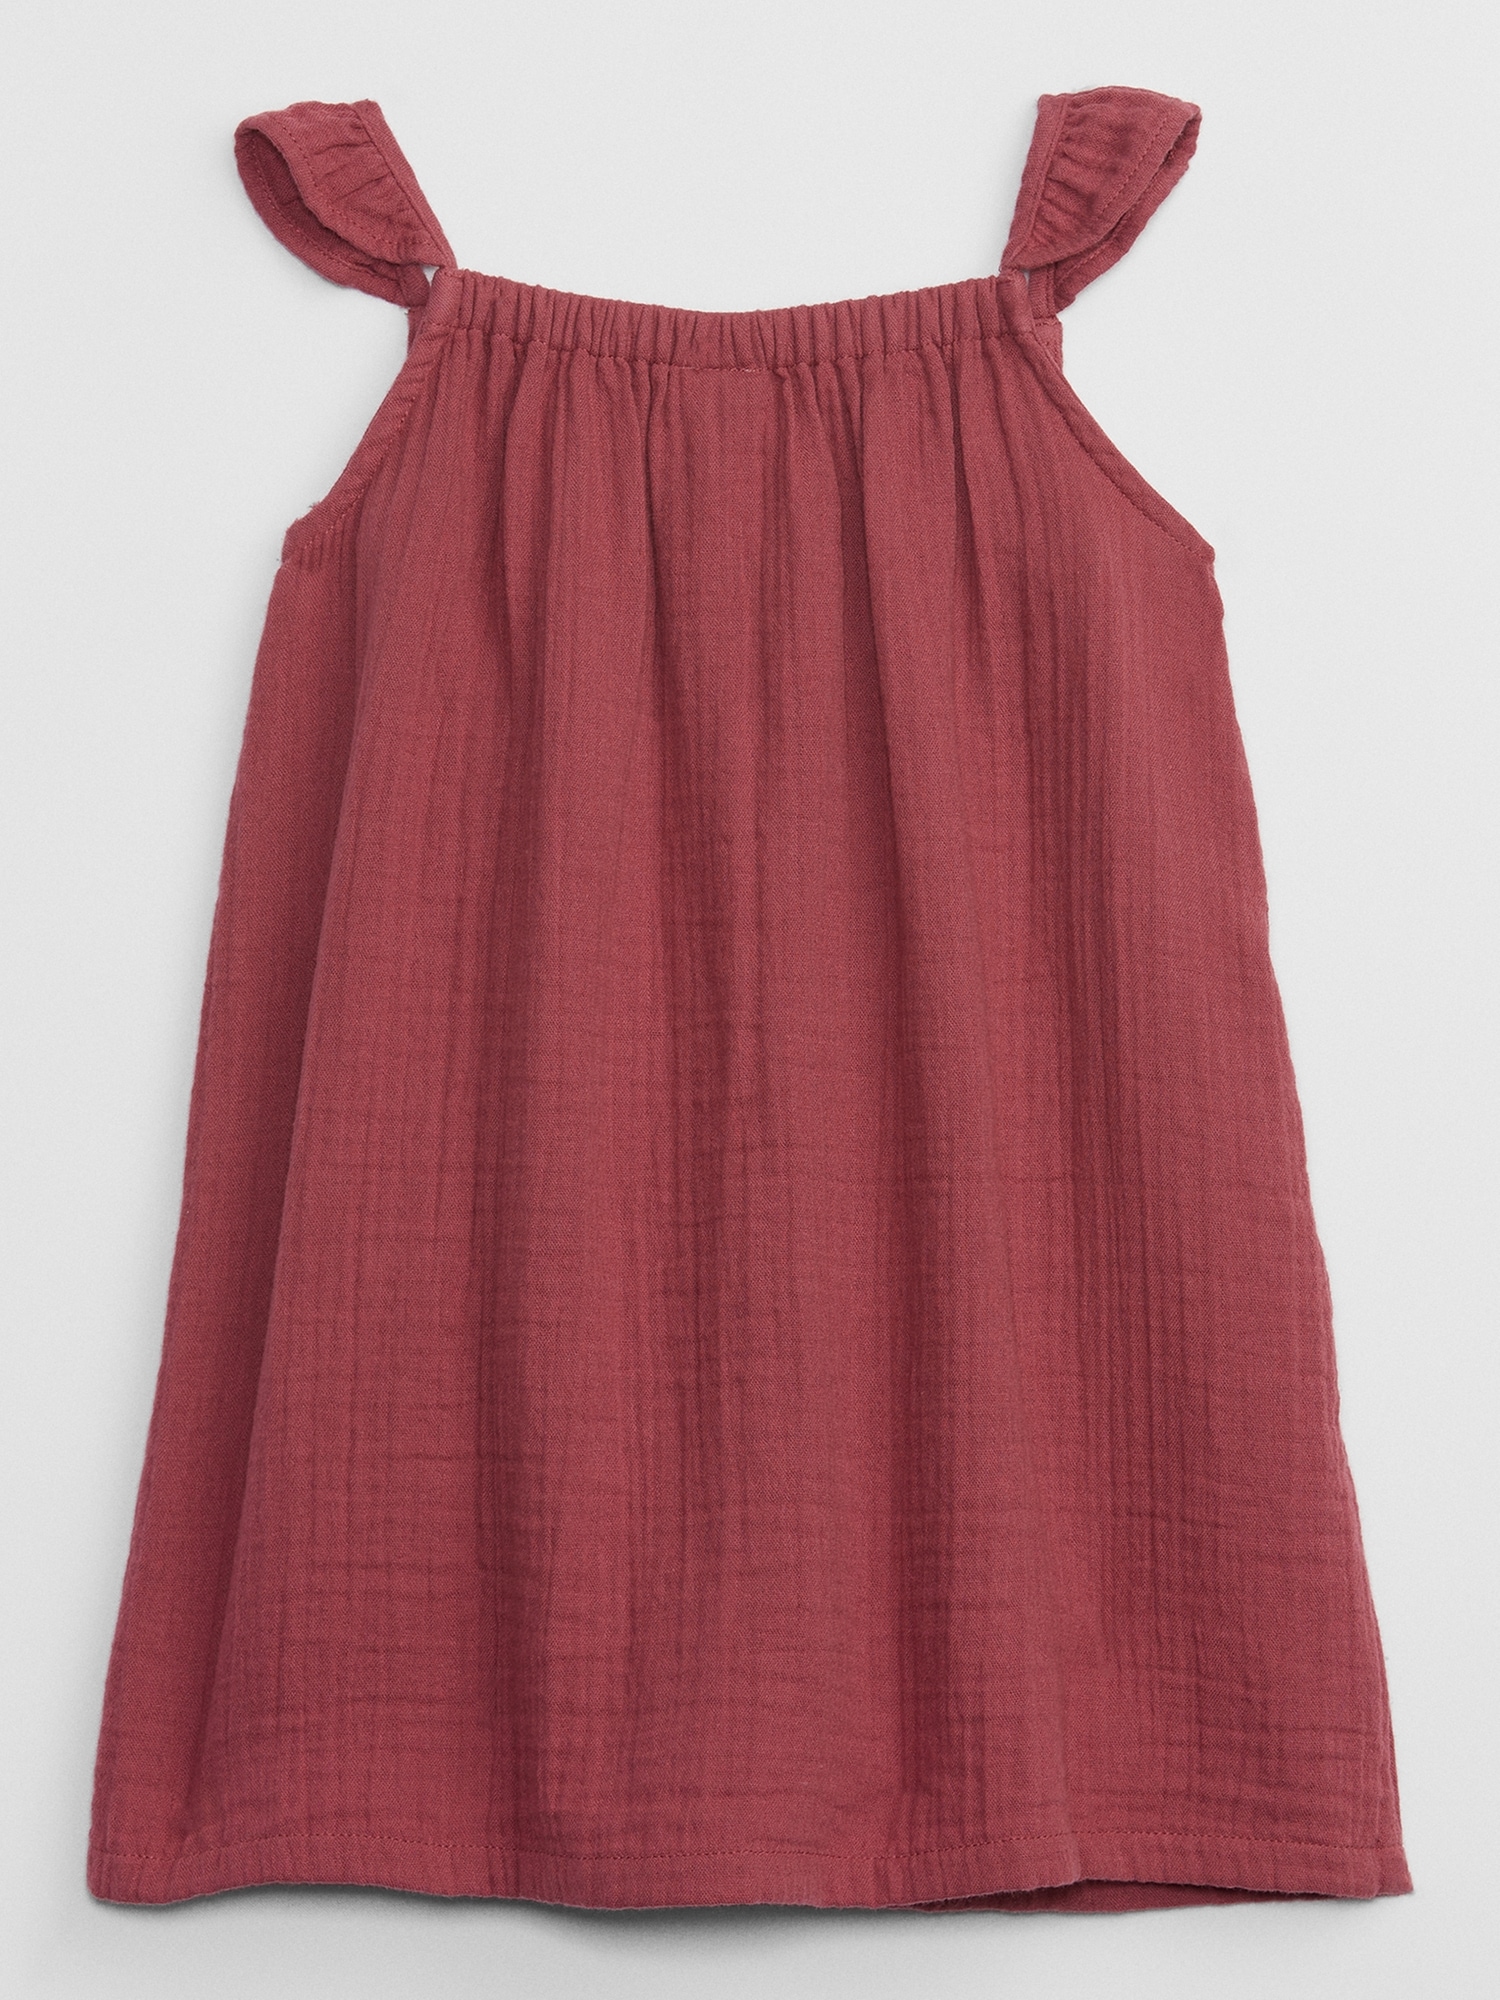 babyGap Smocked Print Dress | Gap Factory